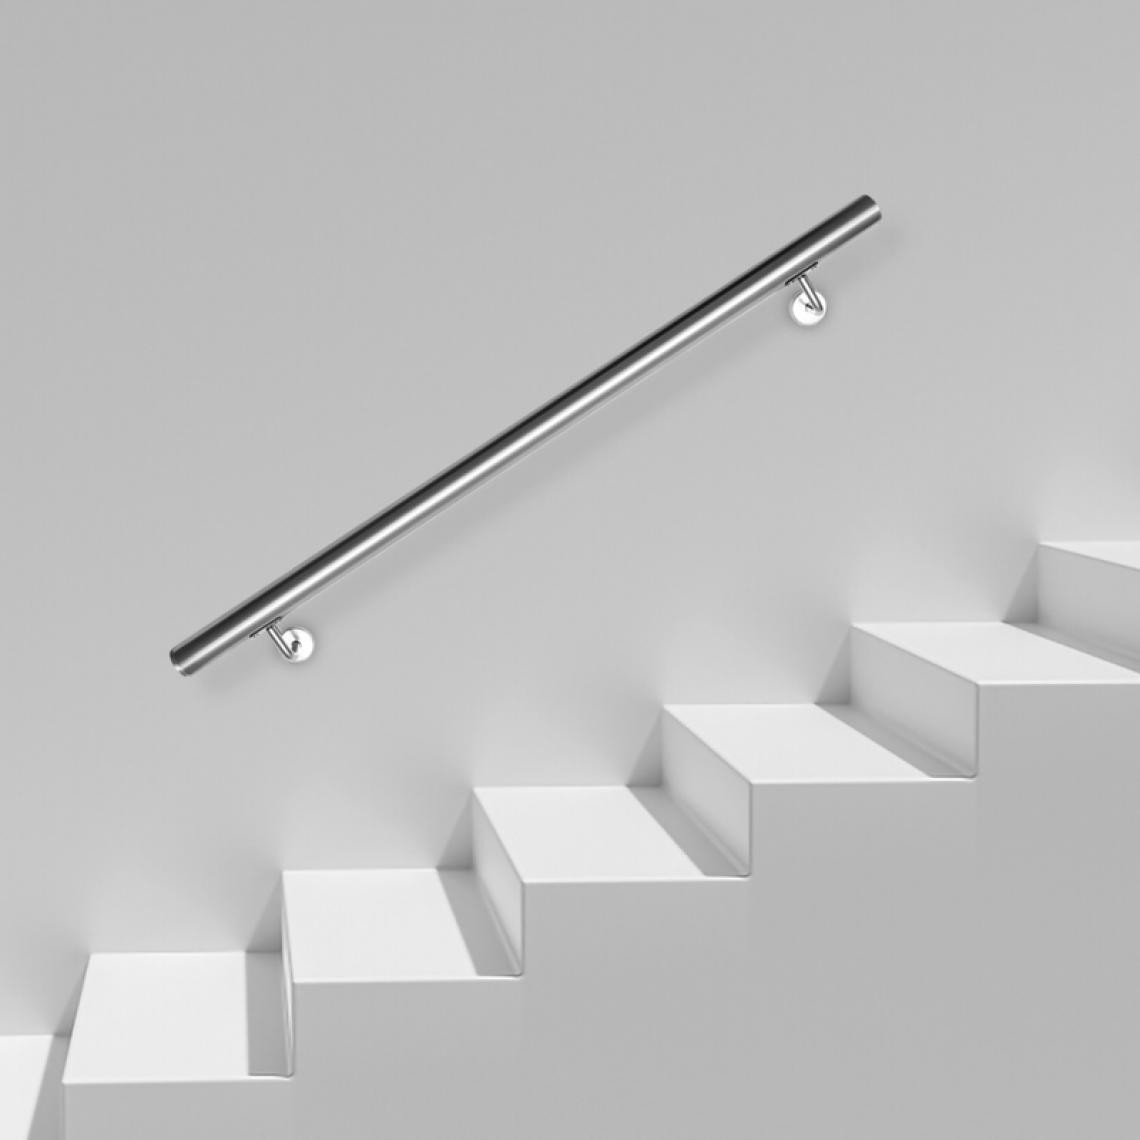 Einfeben - Main courante en acier inoxydable Rampe d'escalier Support mural Dispositif de fixation Escaliers Acier affiné 100cm - Escalier escamotable